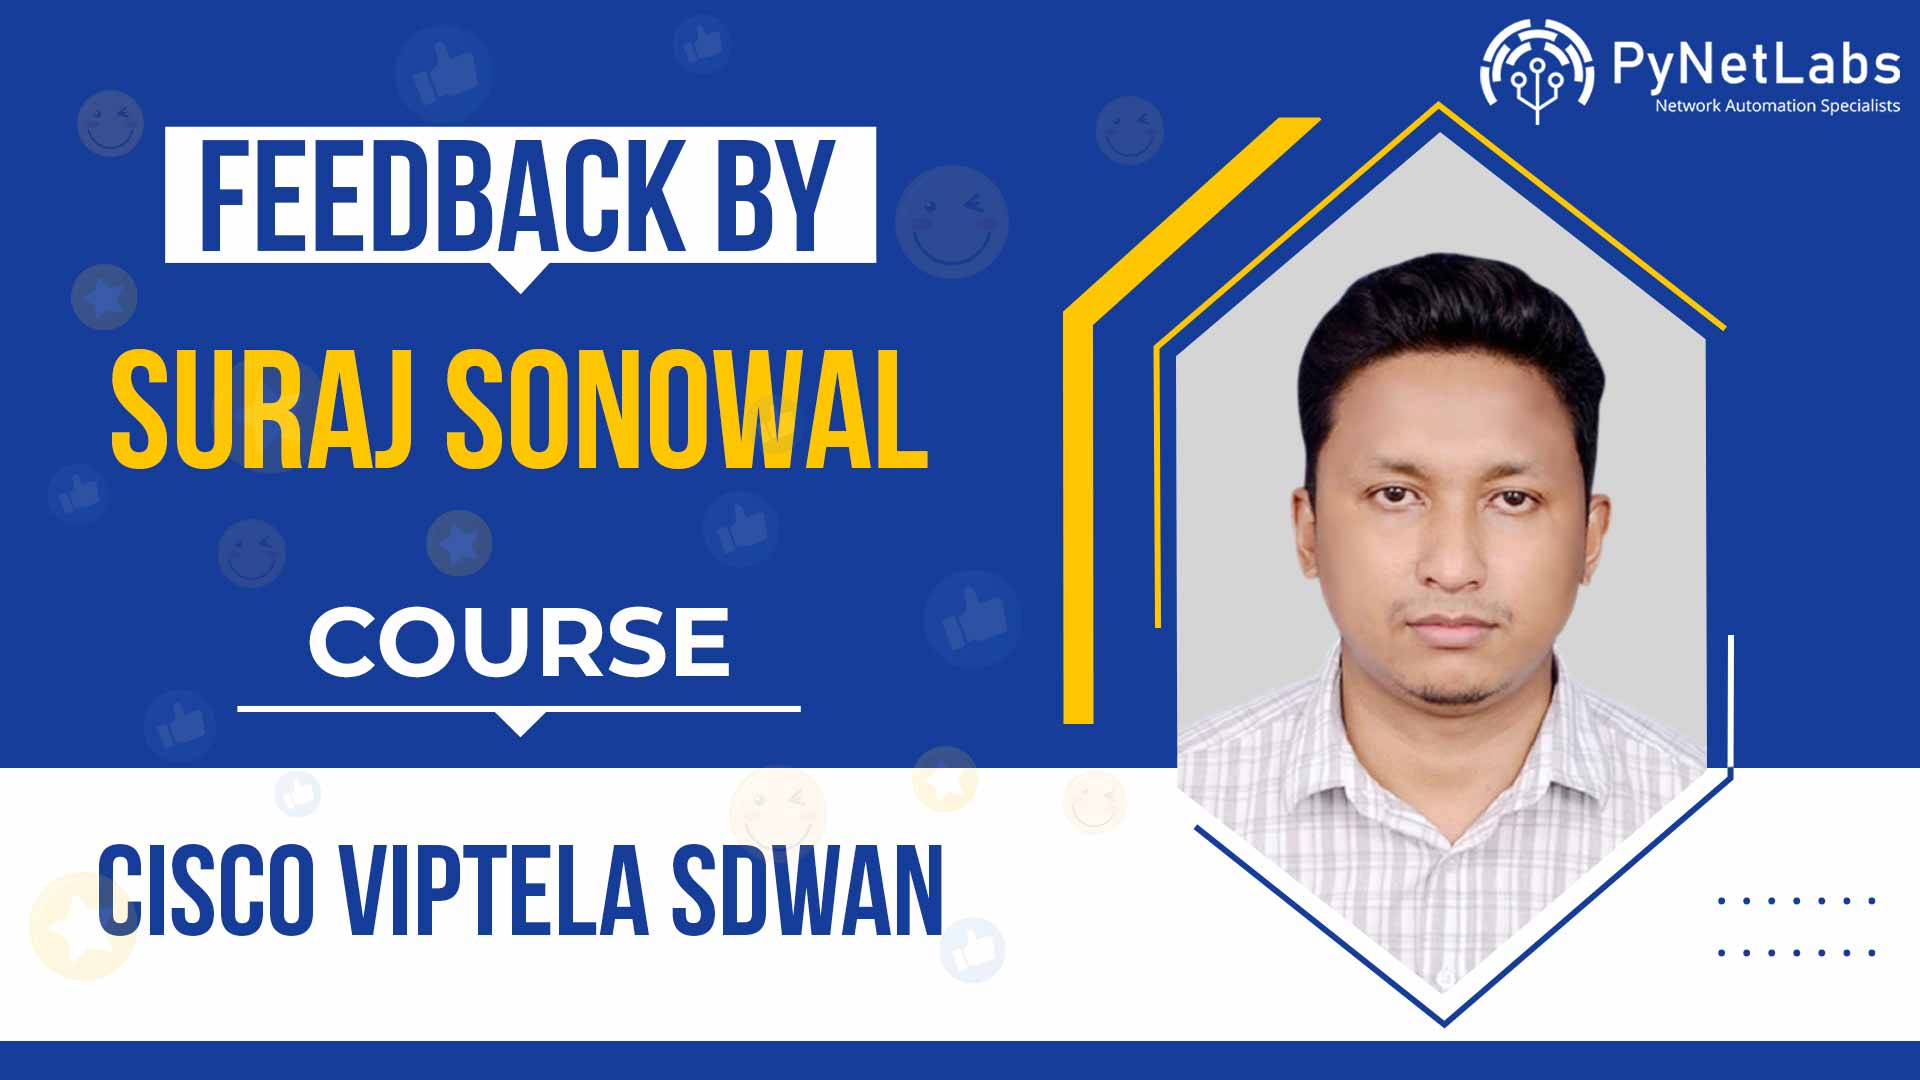 Feedback by Suraj Sonowal for Course - Cisco Viptela SDWAN